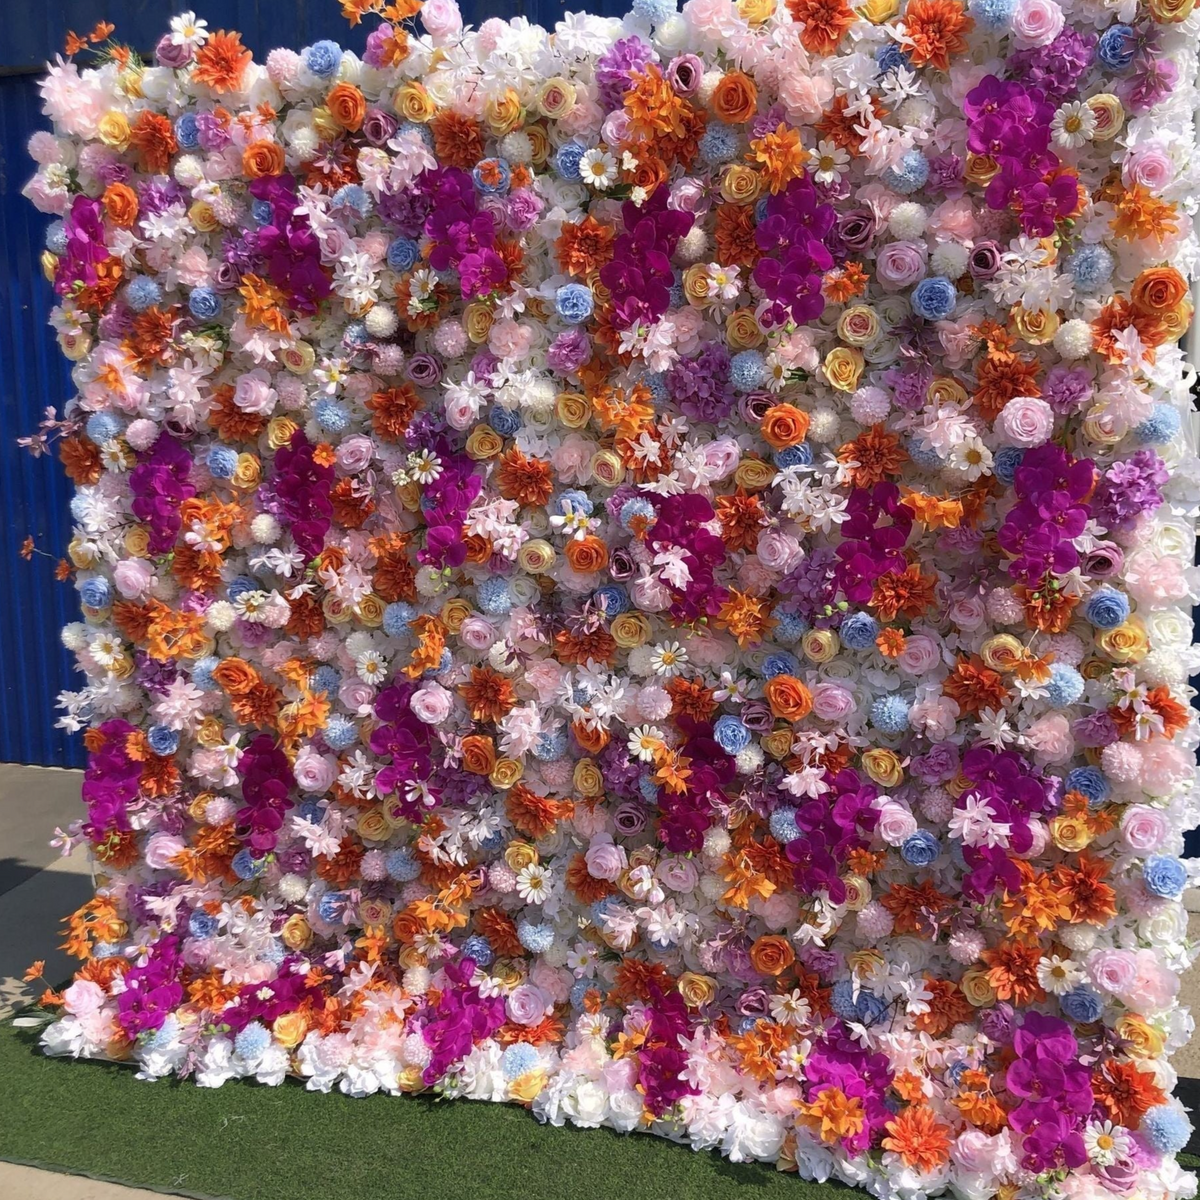 3D Artificial Flower Wall Arrangement Wedding Party Birthday Backdrop Decor HQ3951